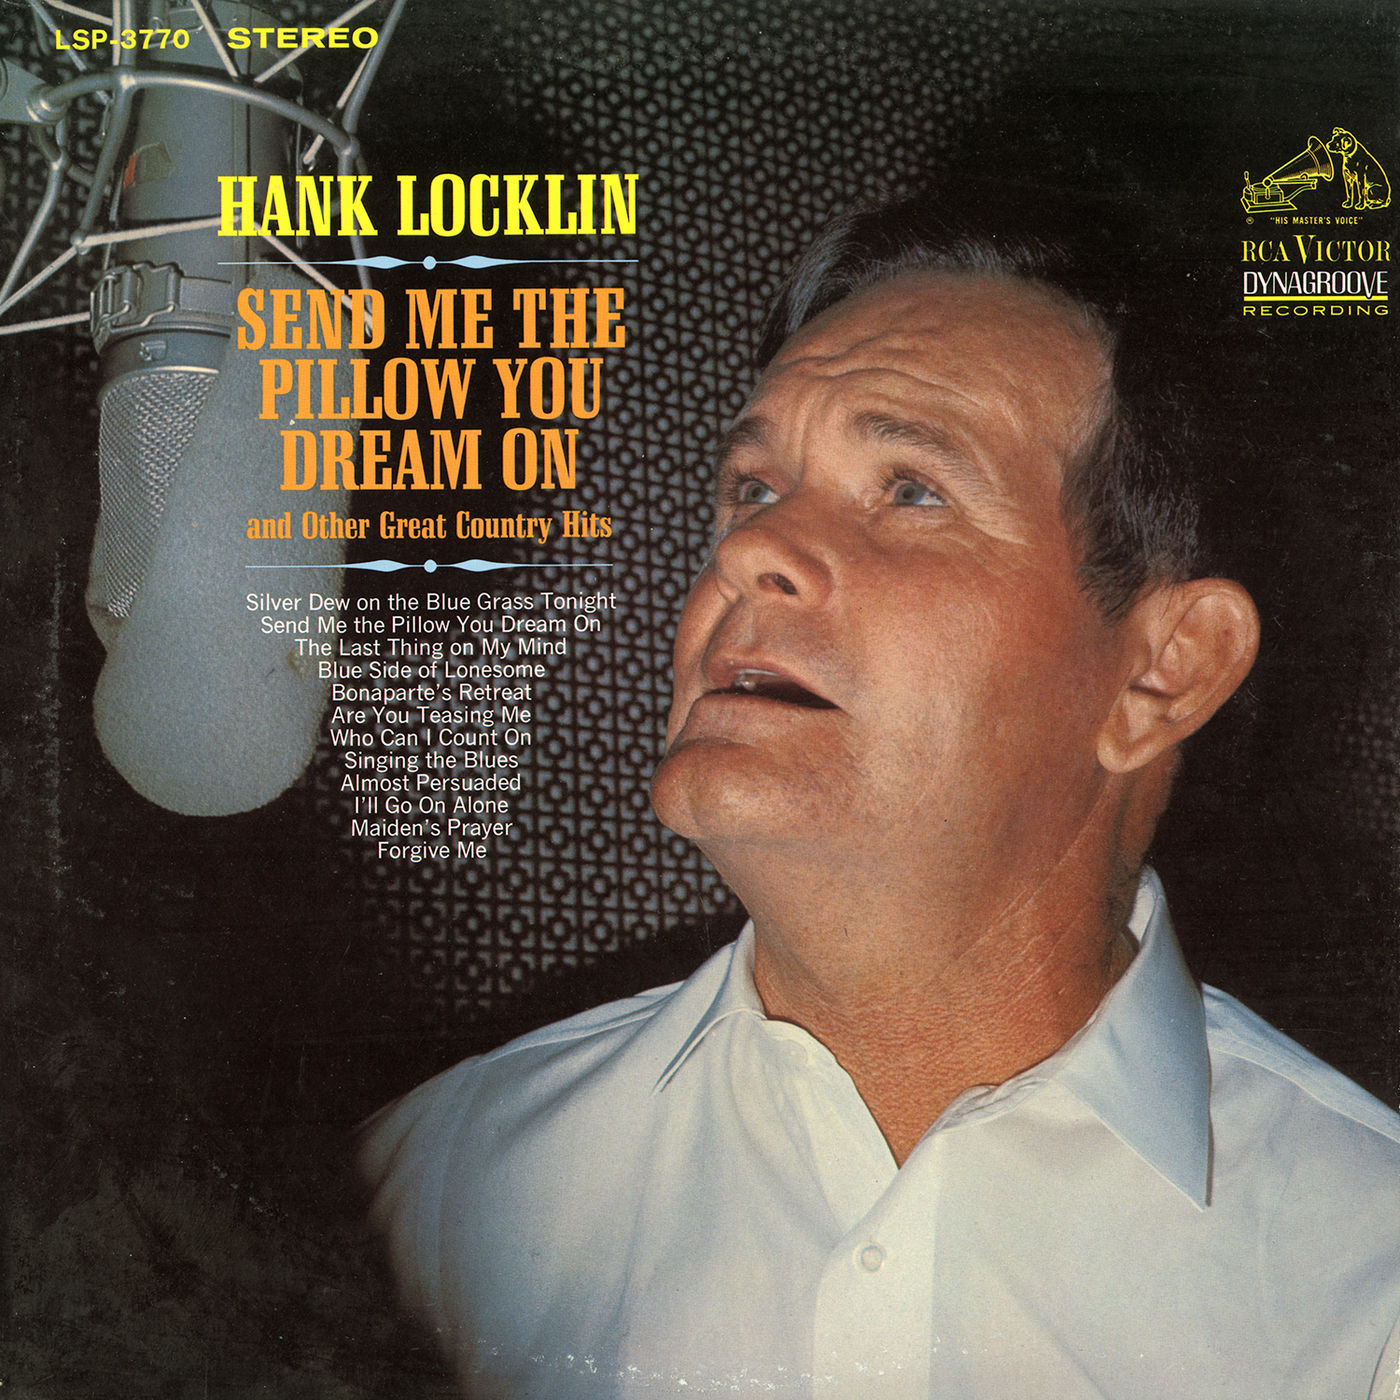 Hank Locklin – Send Me The Pillow You Dream On